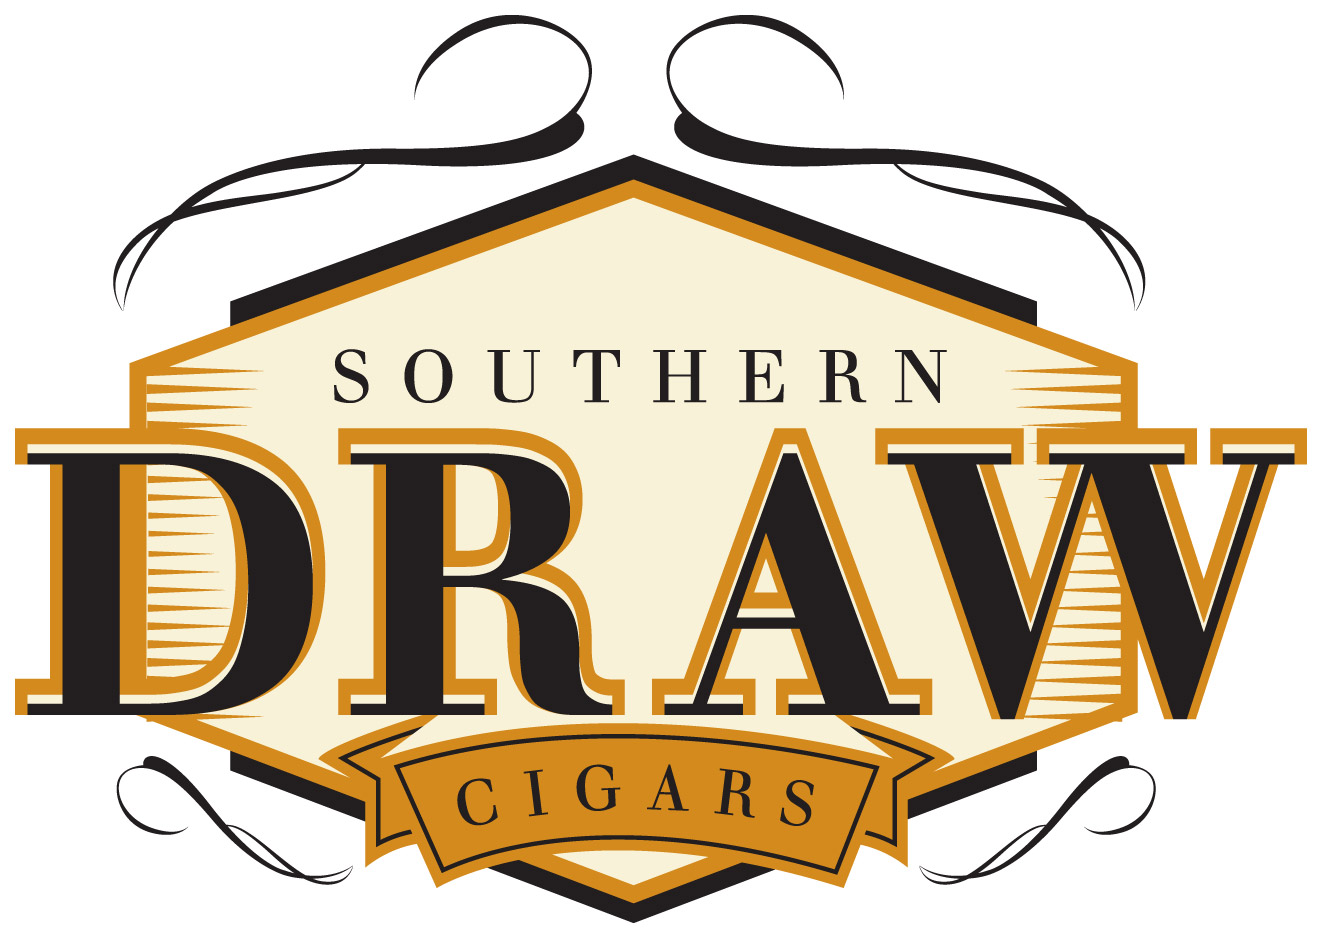 Southern Draw Cigars logo